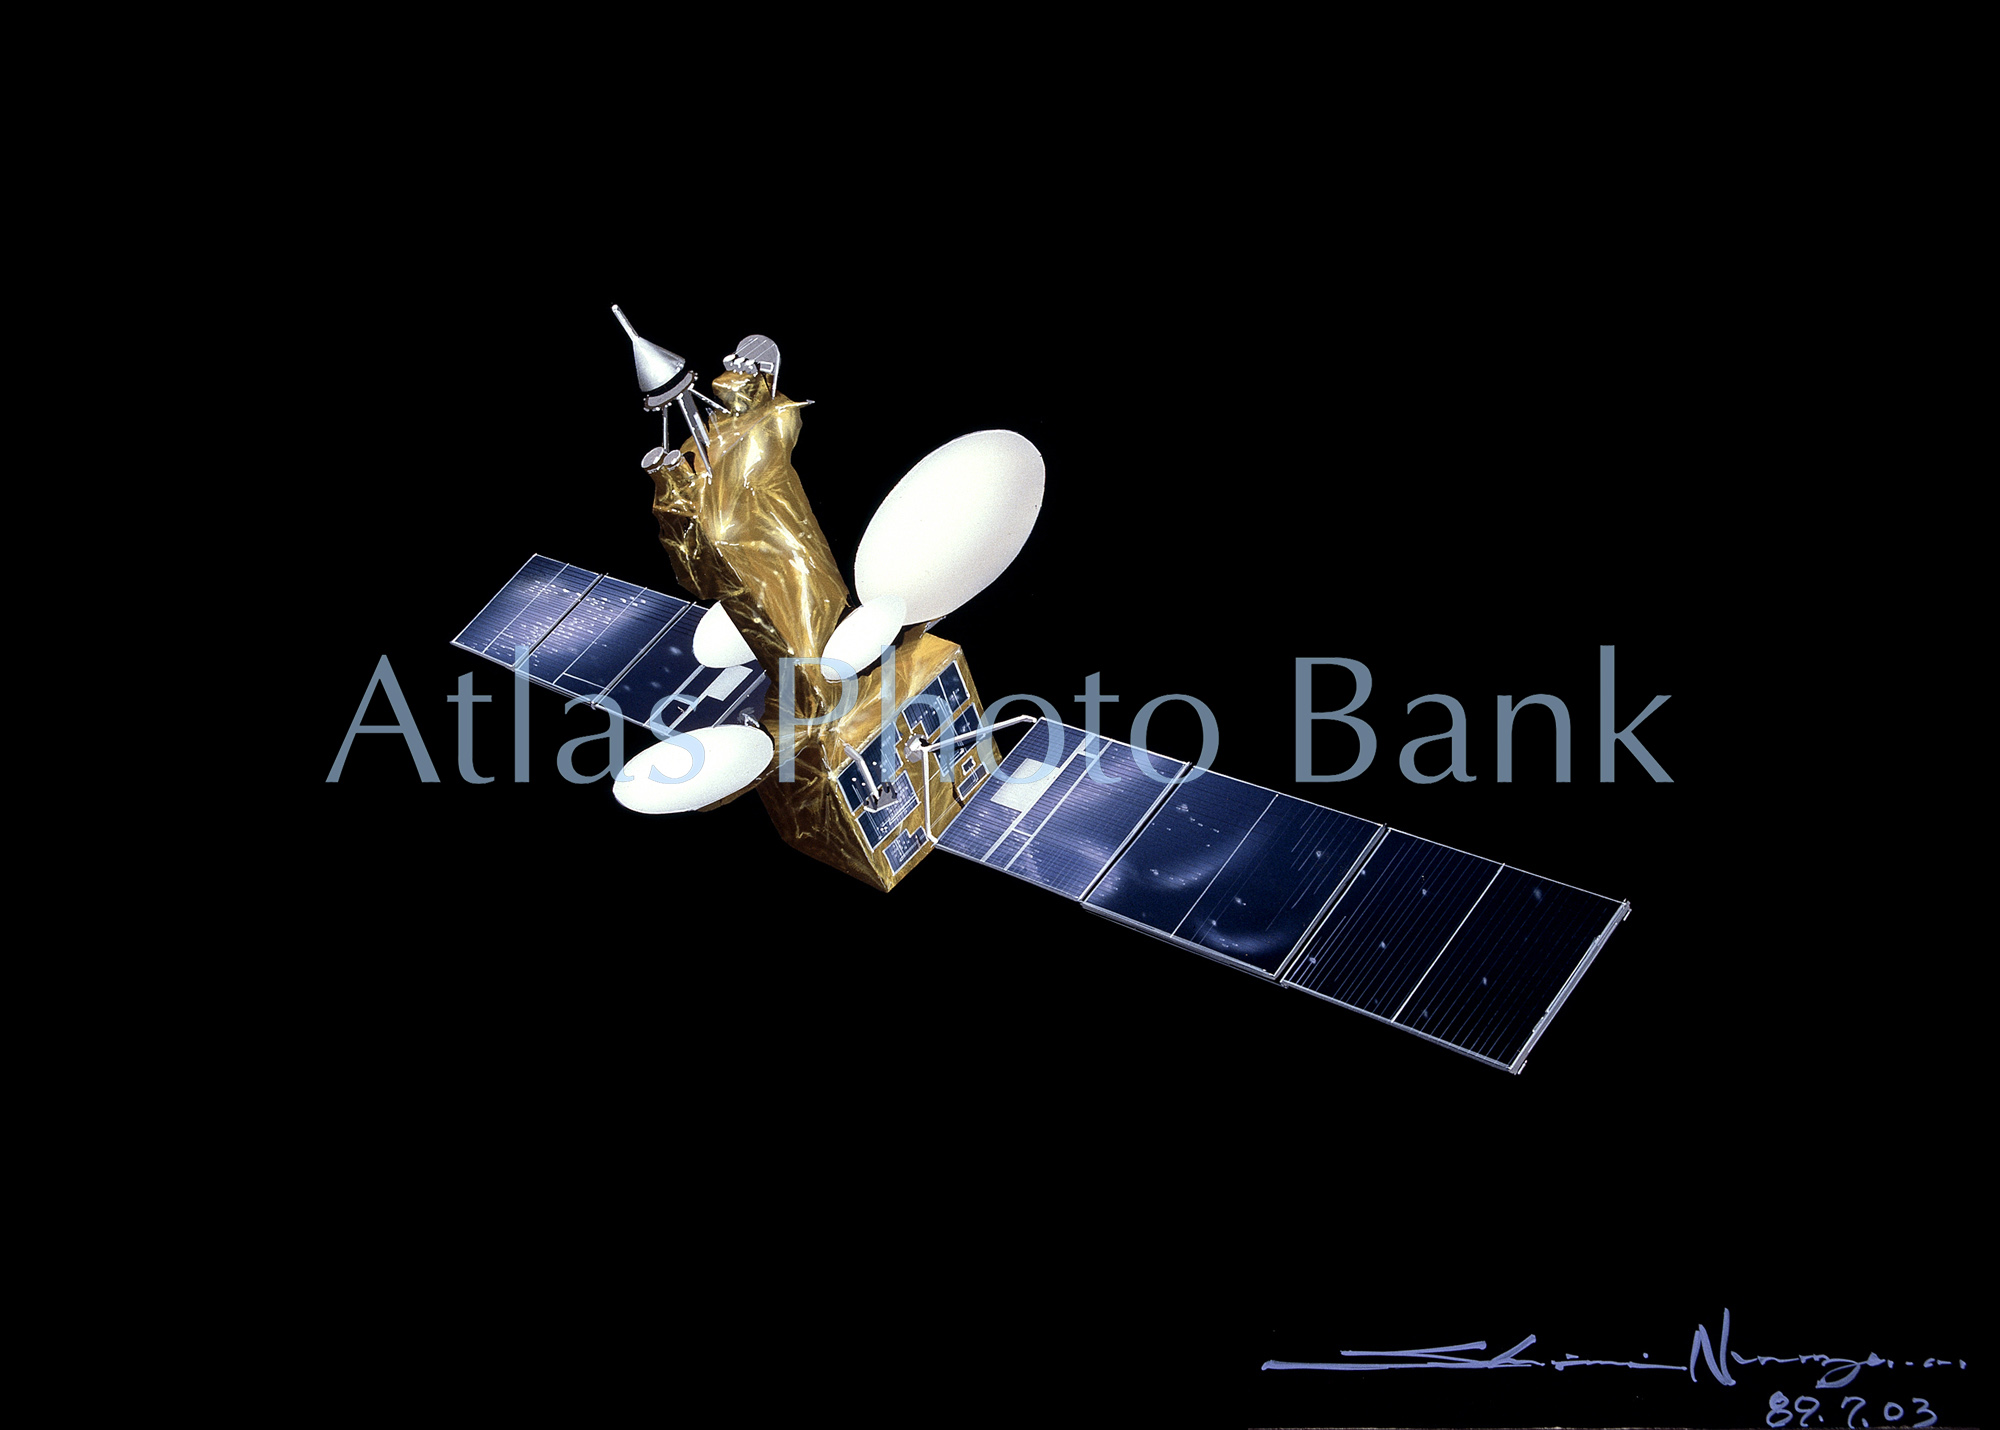 MP-012-通信衛星インテルサット5号-204302-インテルサットV